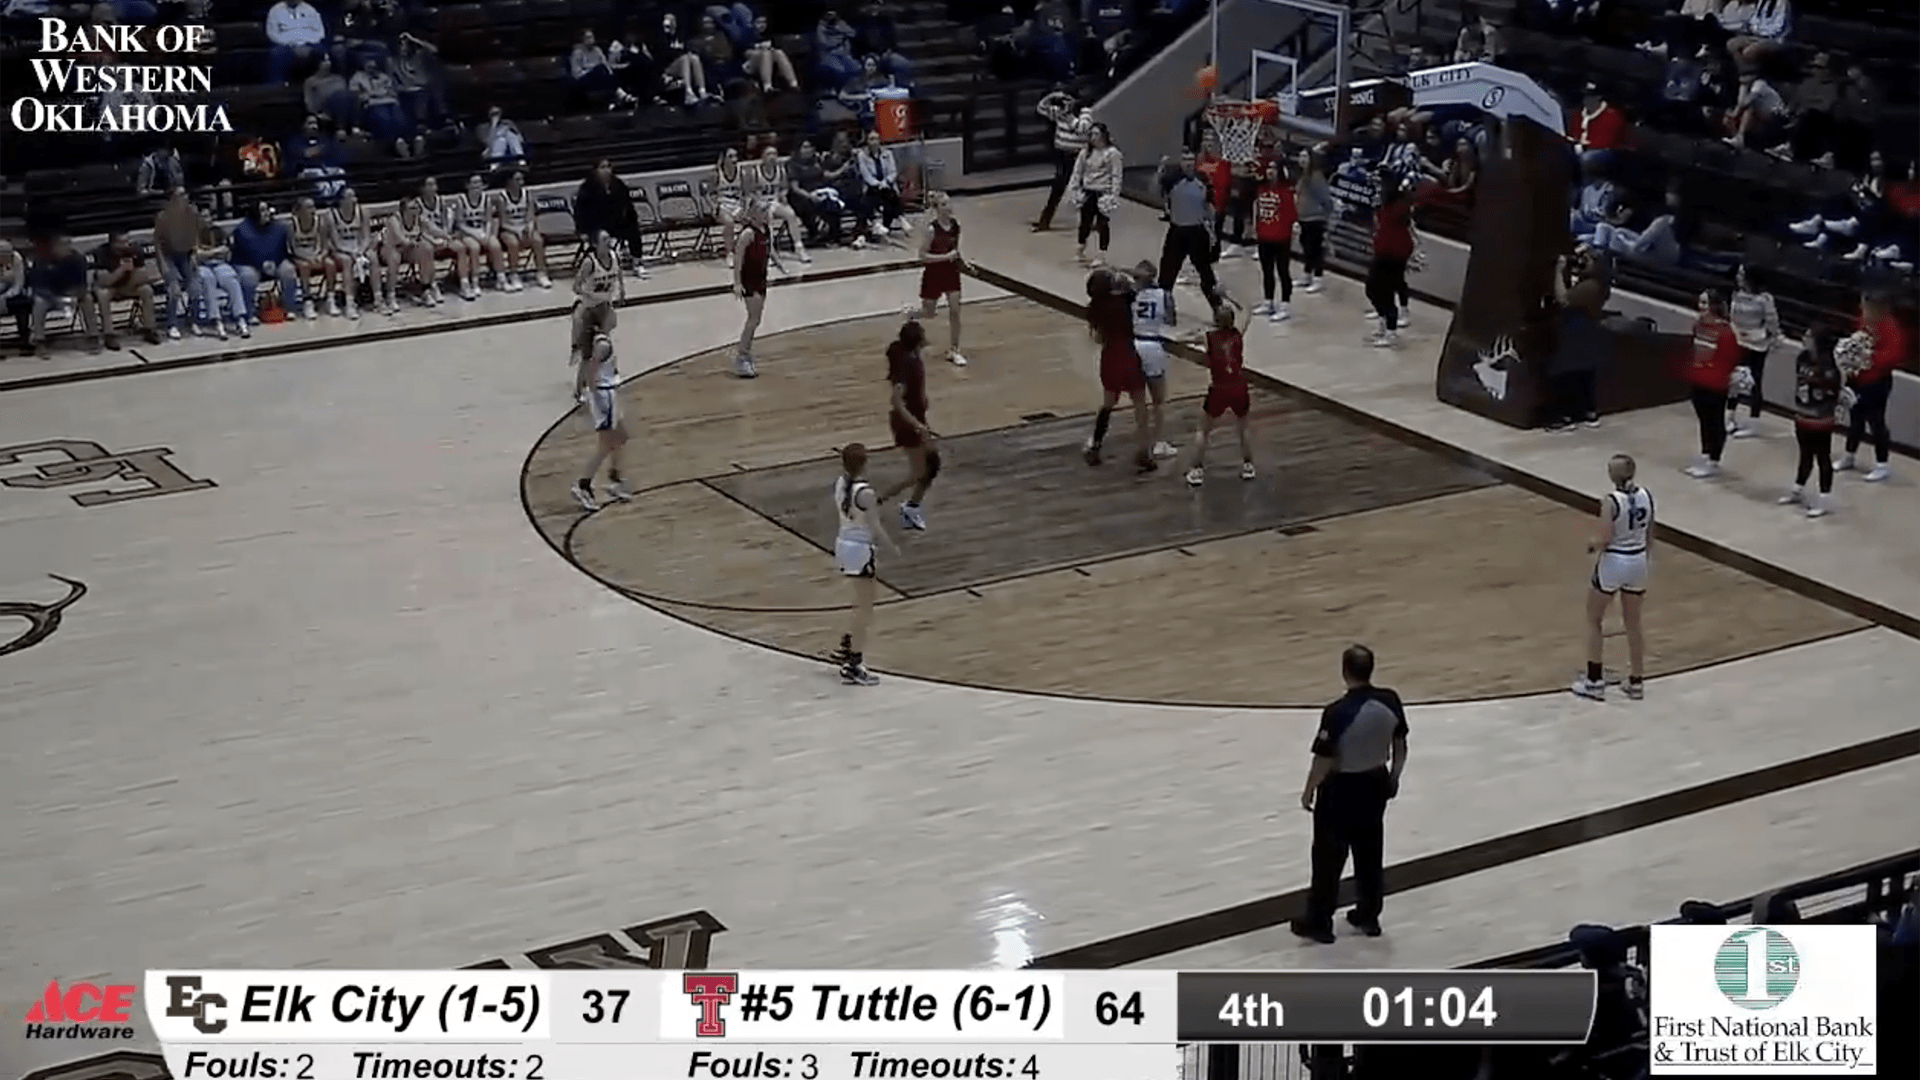 Elk City vs. Tuttle Girls Basketball Game - Intense Action on the Court